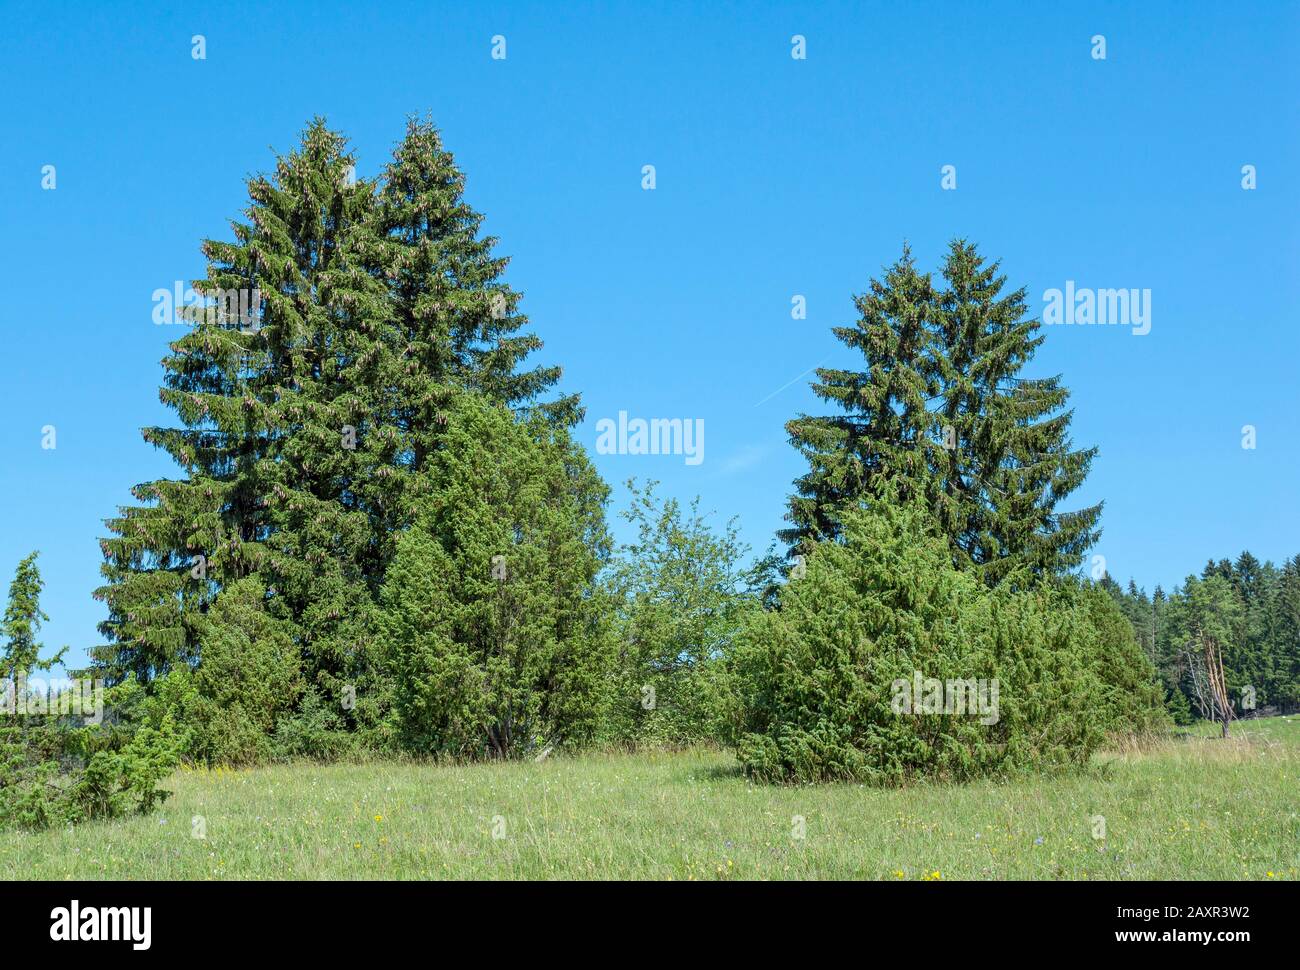 Germany, Baden-Württemberg, Hayingen, Norway spruce in the Naturschutzgebiet Digelfeld, the largest juniper heath in the Swabian Alb. Stock Photo